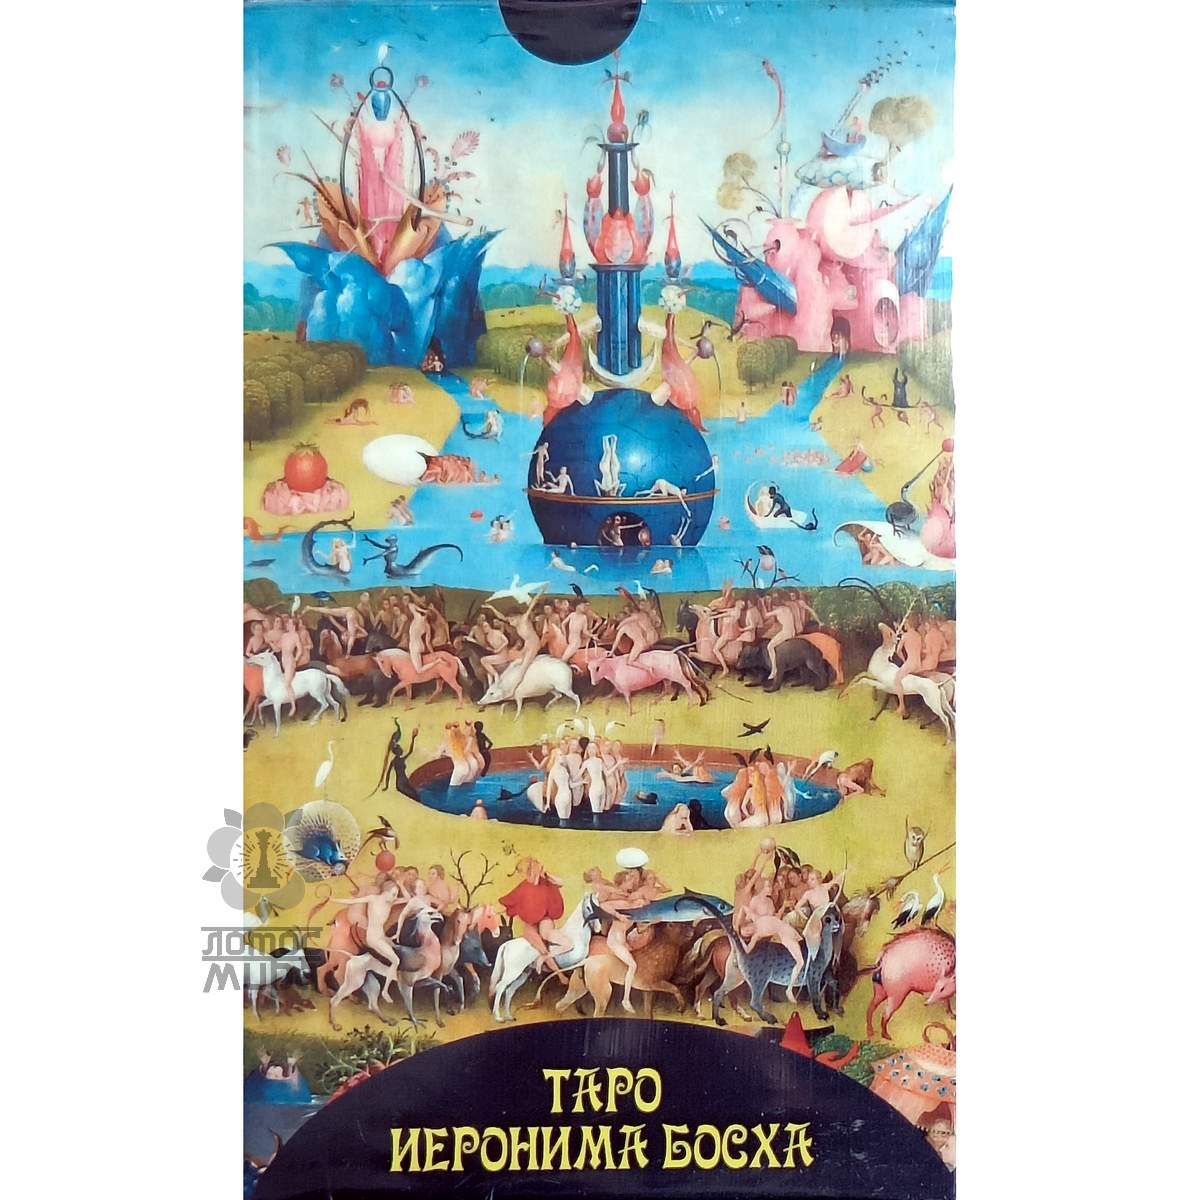 Hieronymus Bosch Tarot /Иеронима Босха/ Украина